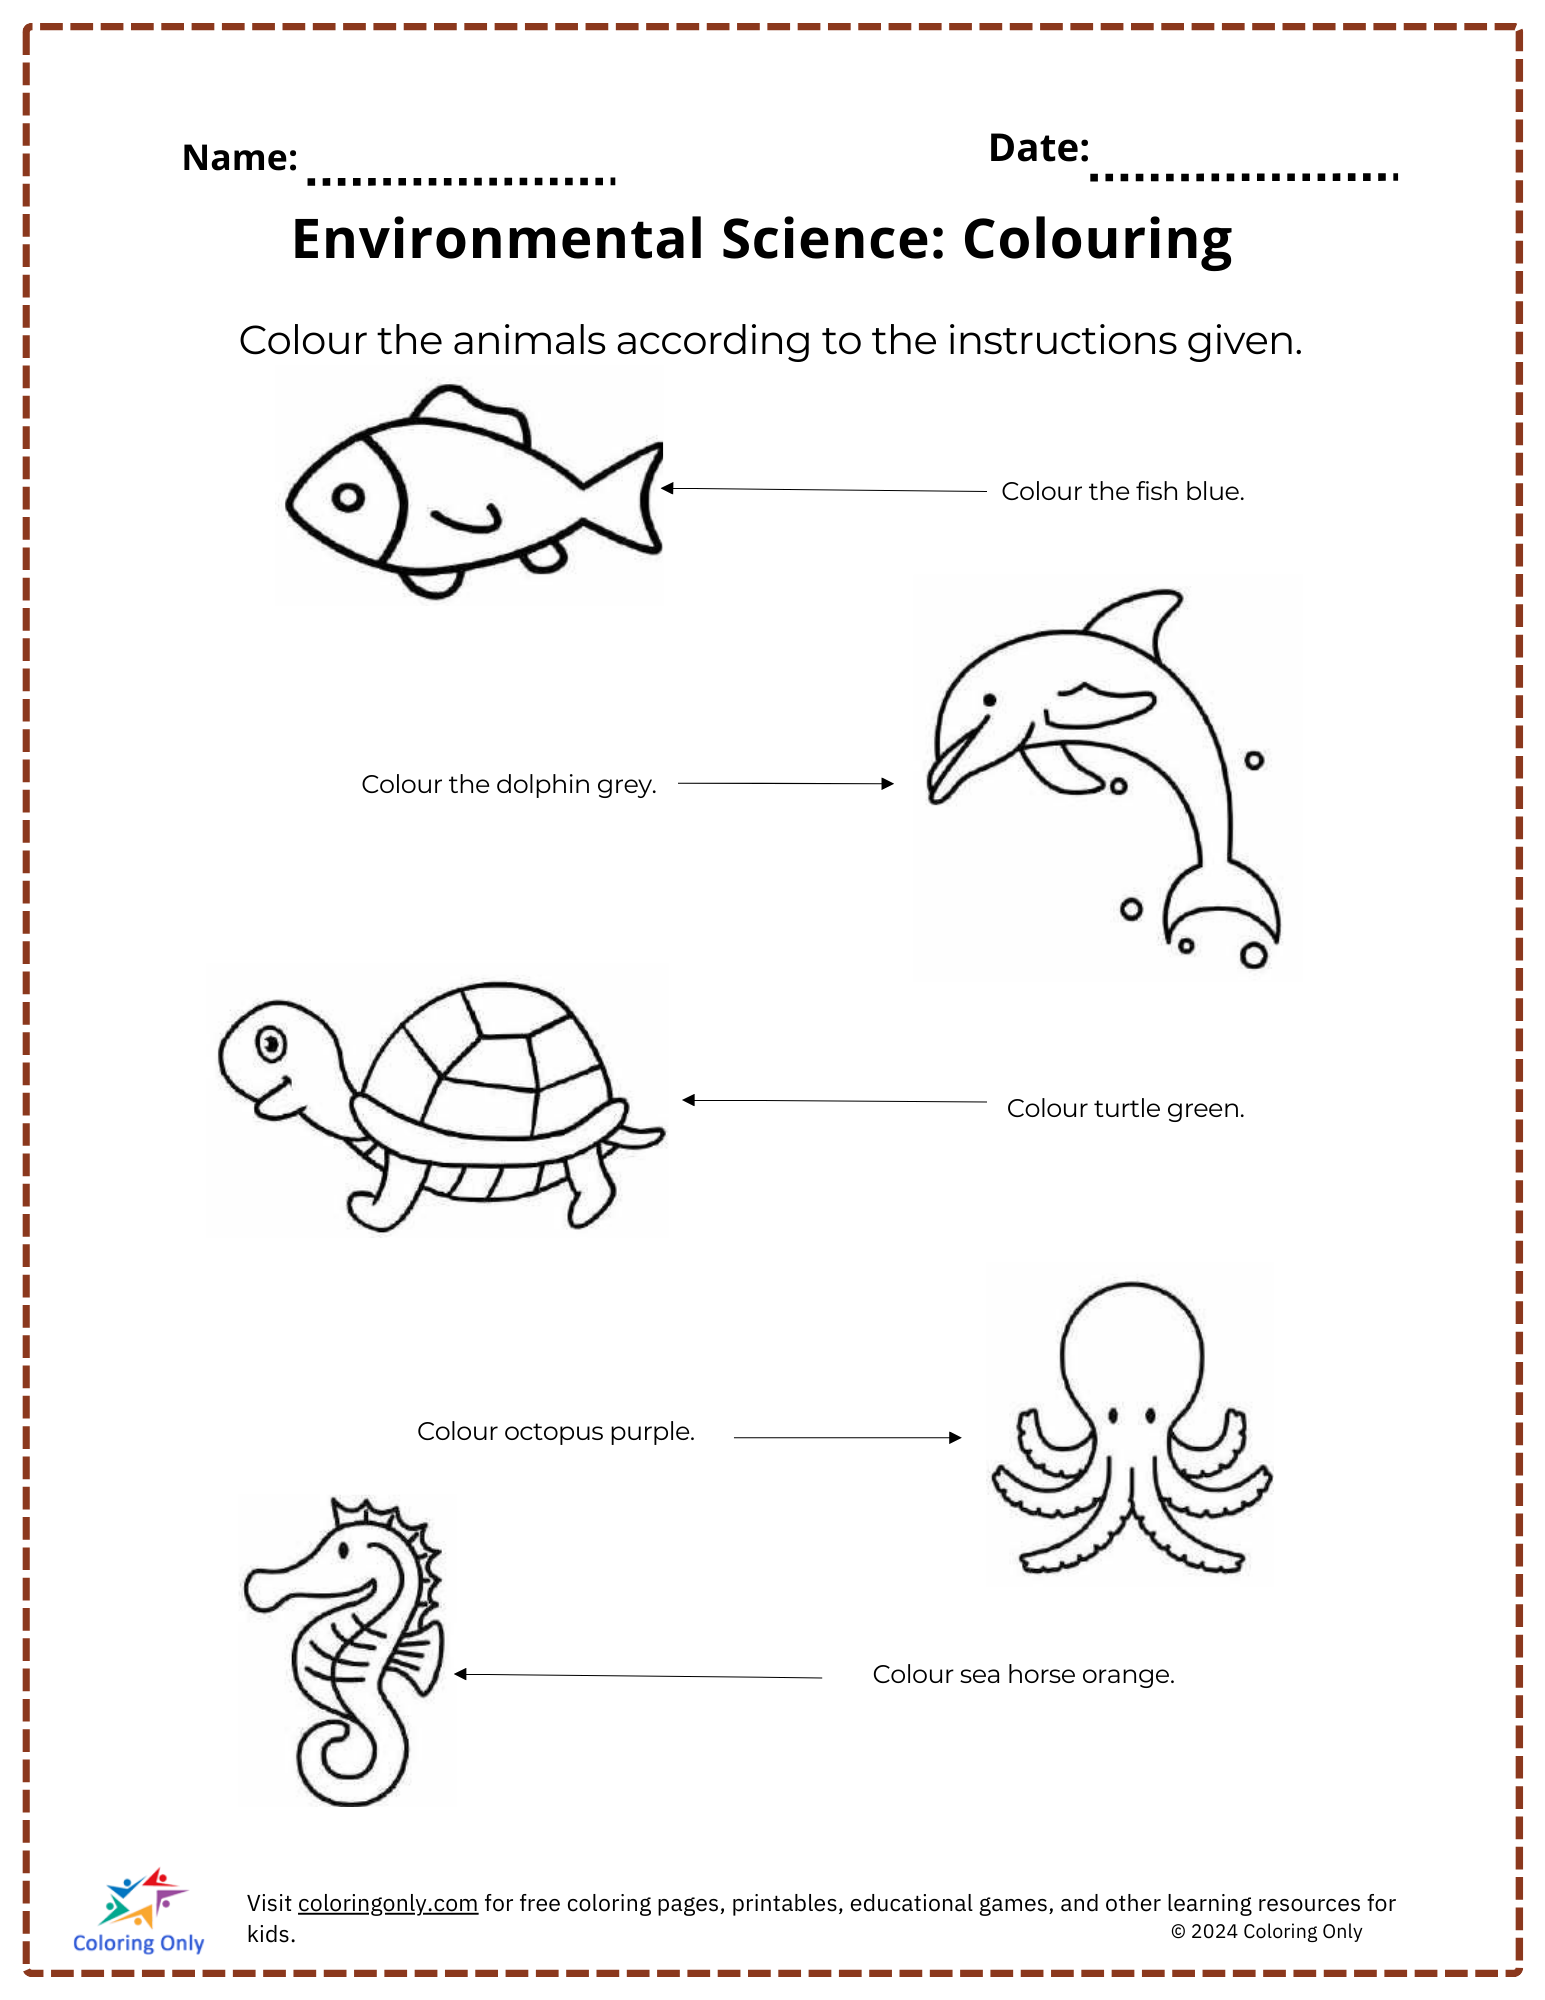 Environmental Science: Colouring Free Printable Worksheet